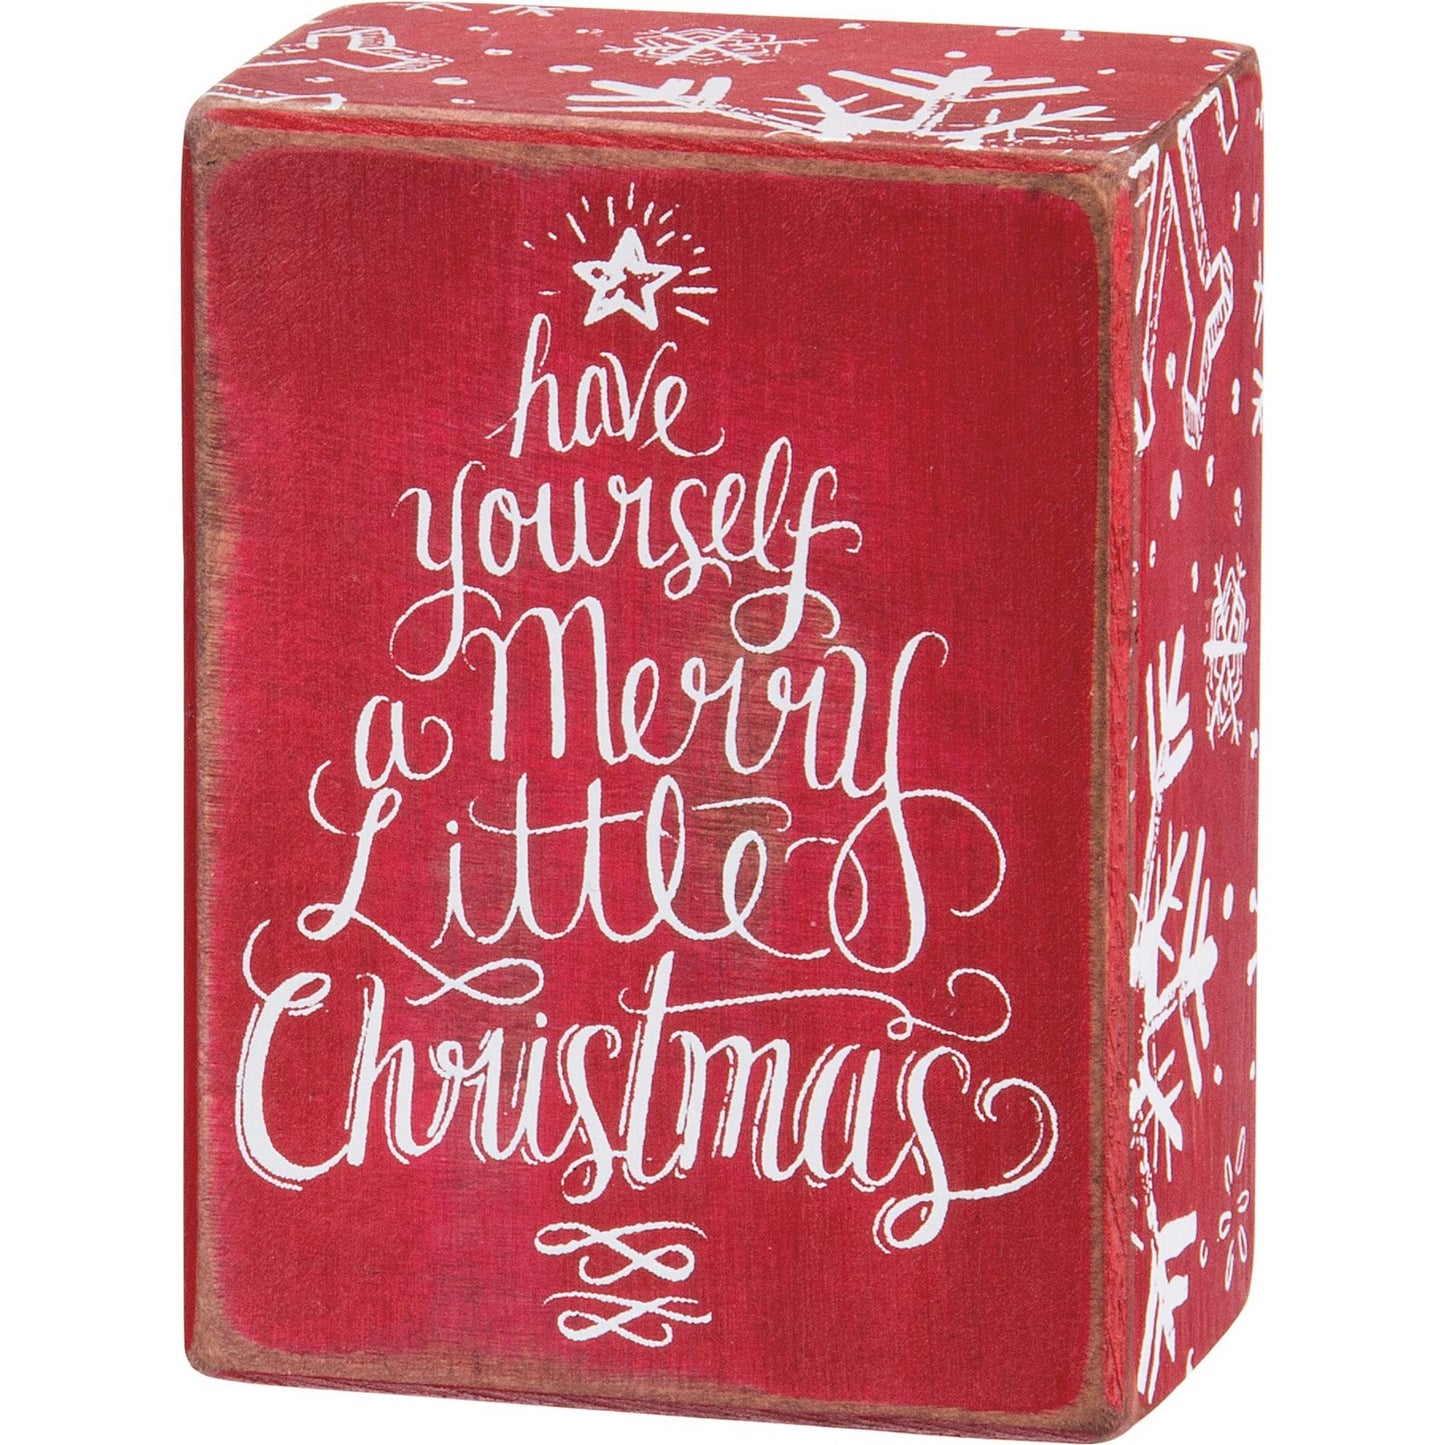 Merry little Christmas Box Sign SolagoHome